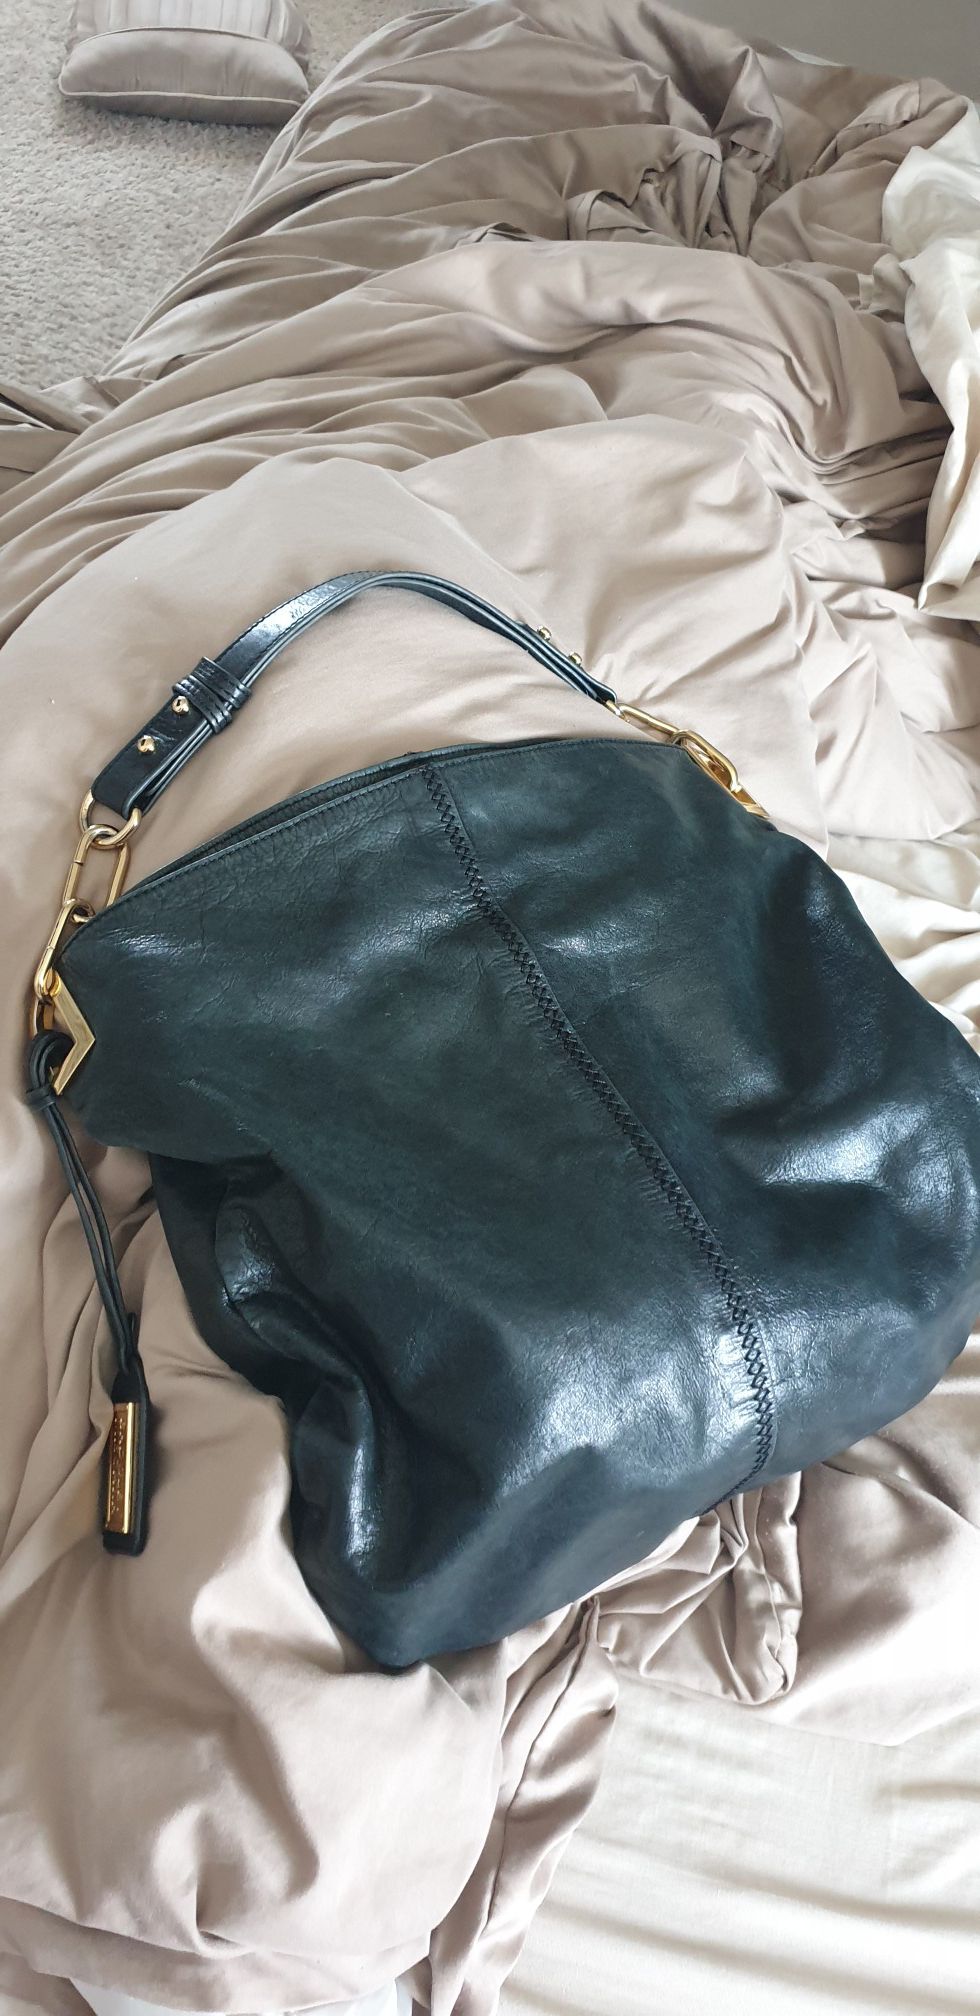 Authentic Badgley Mischka leather hobo bag.